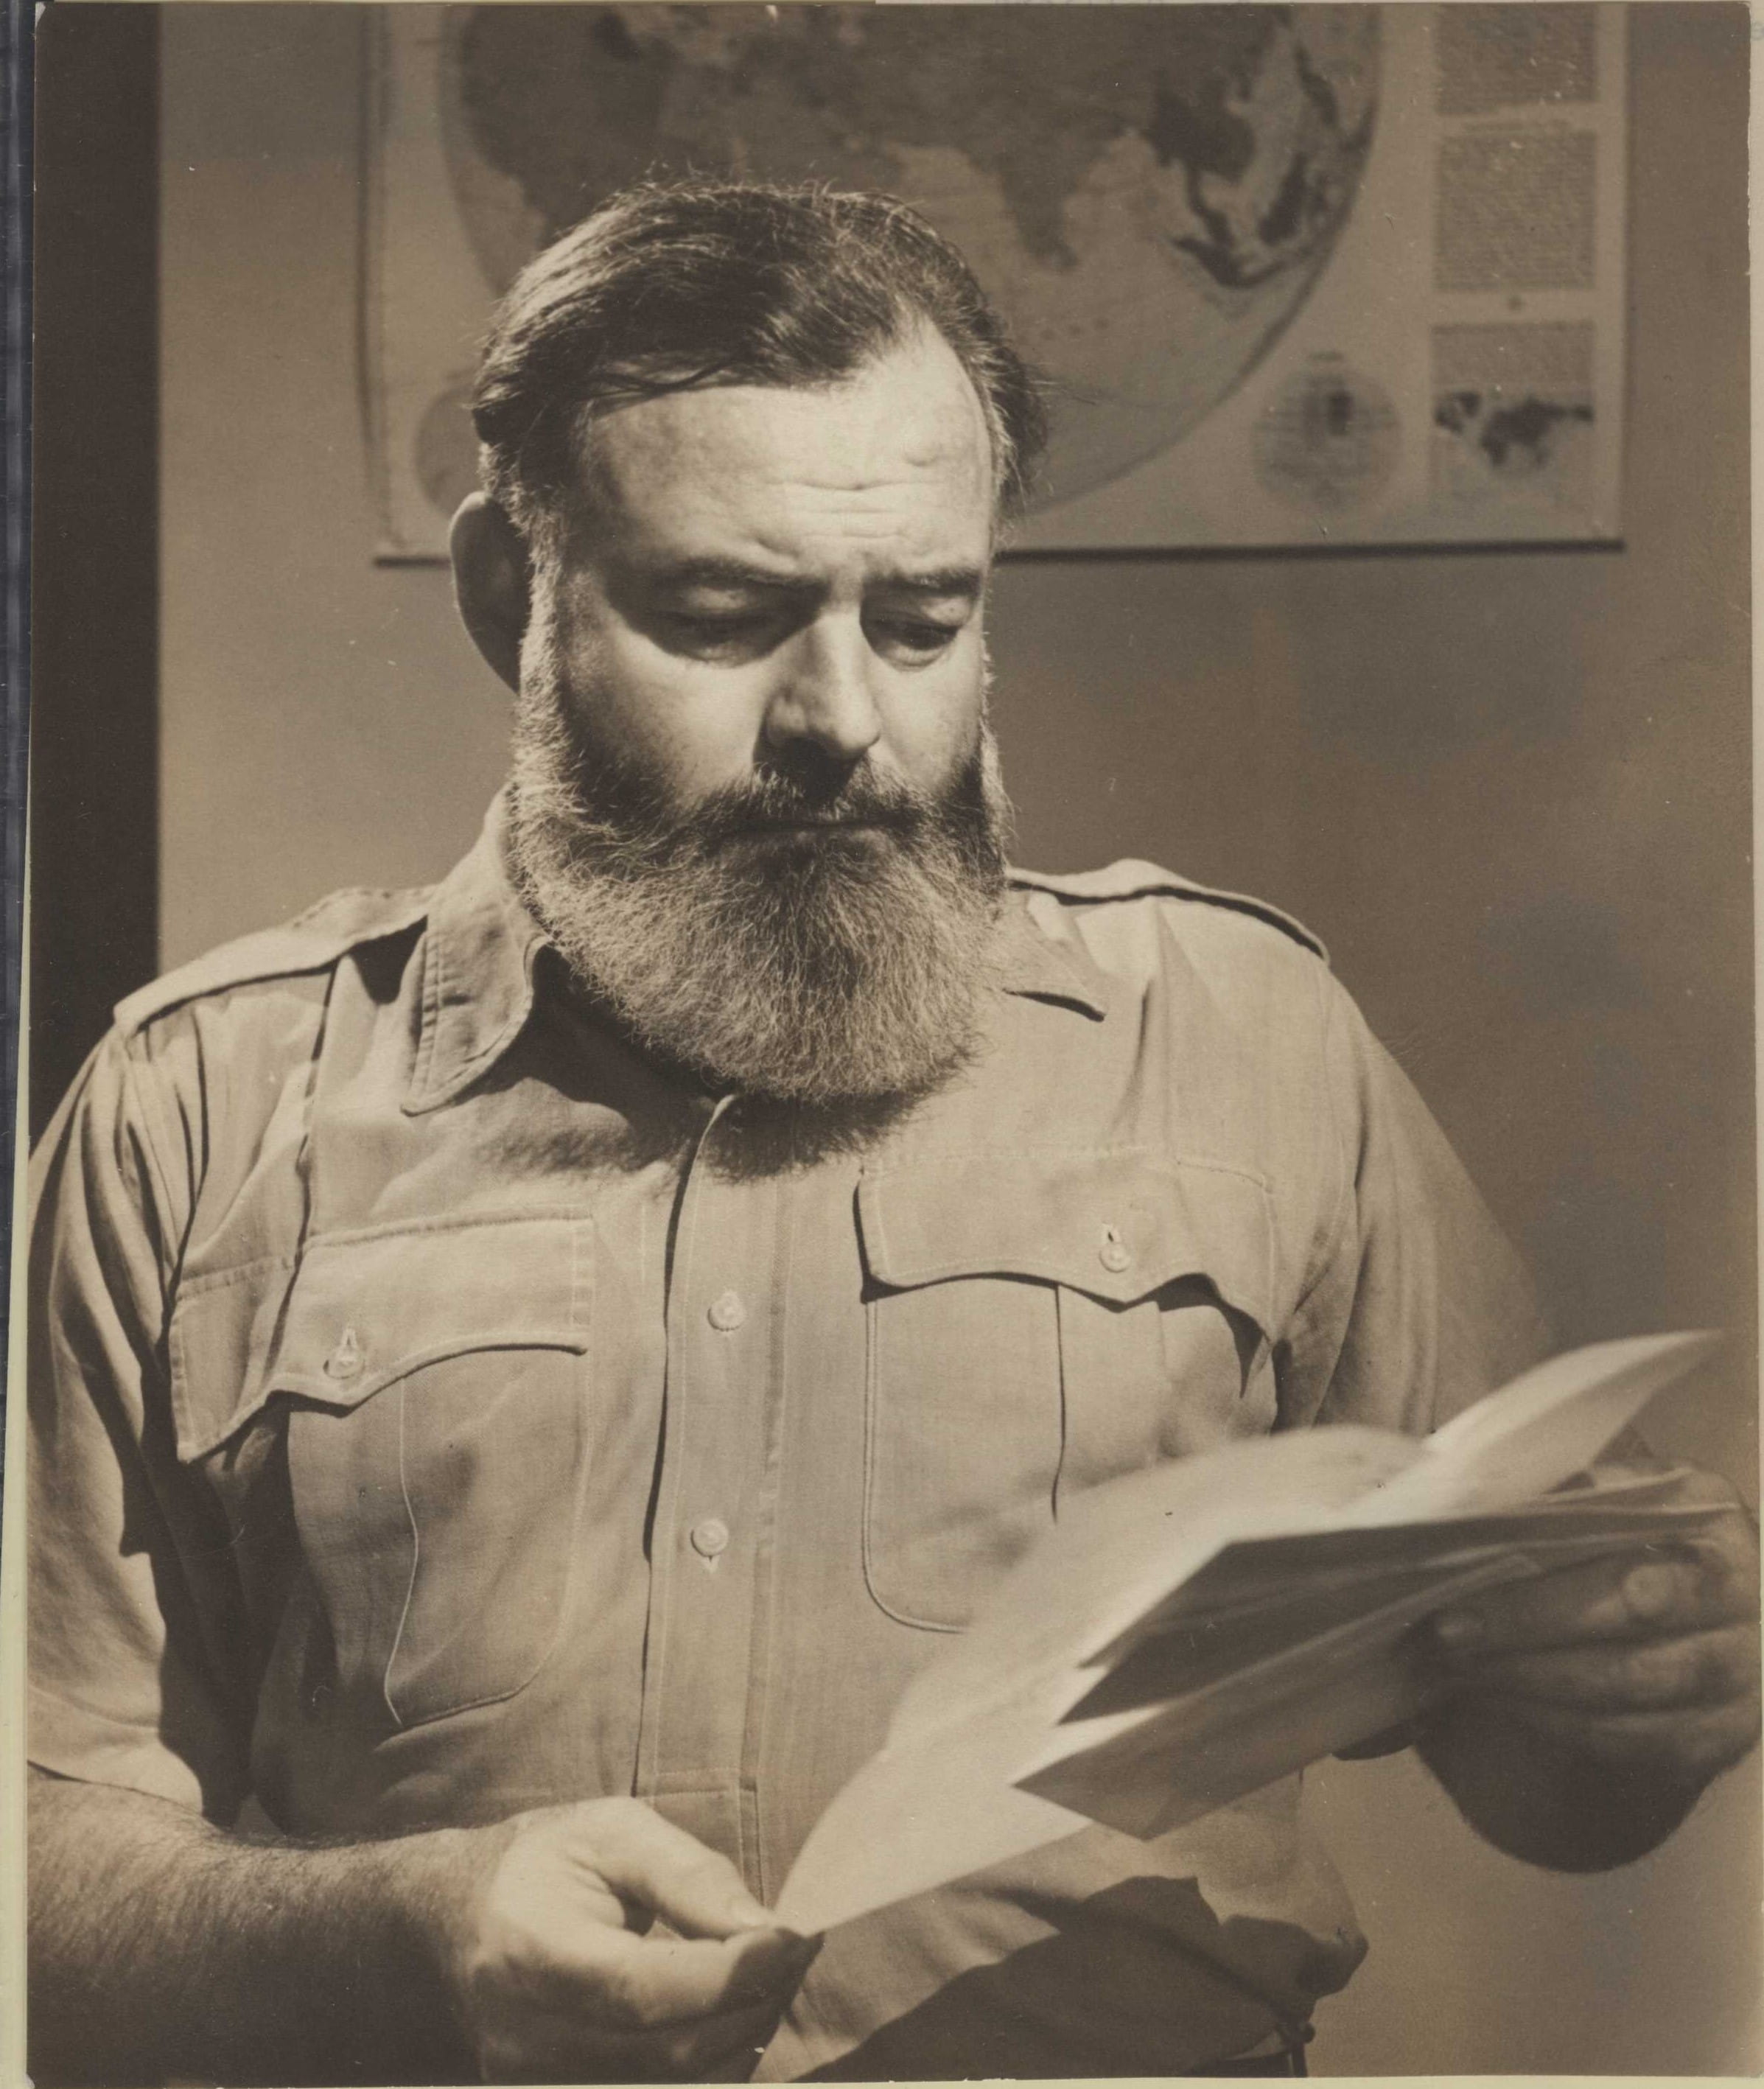 Hemingway reading a letter.